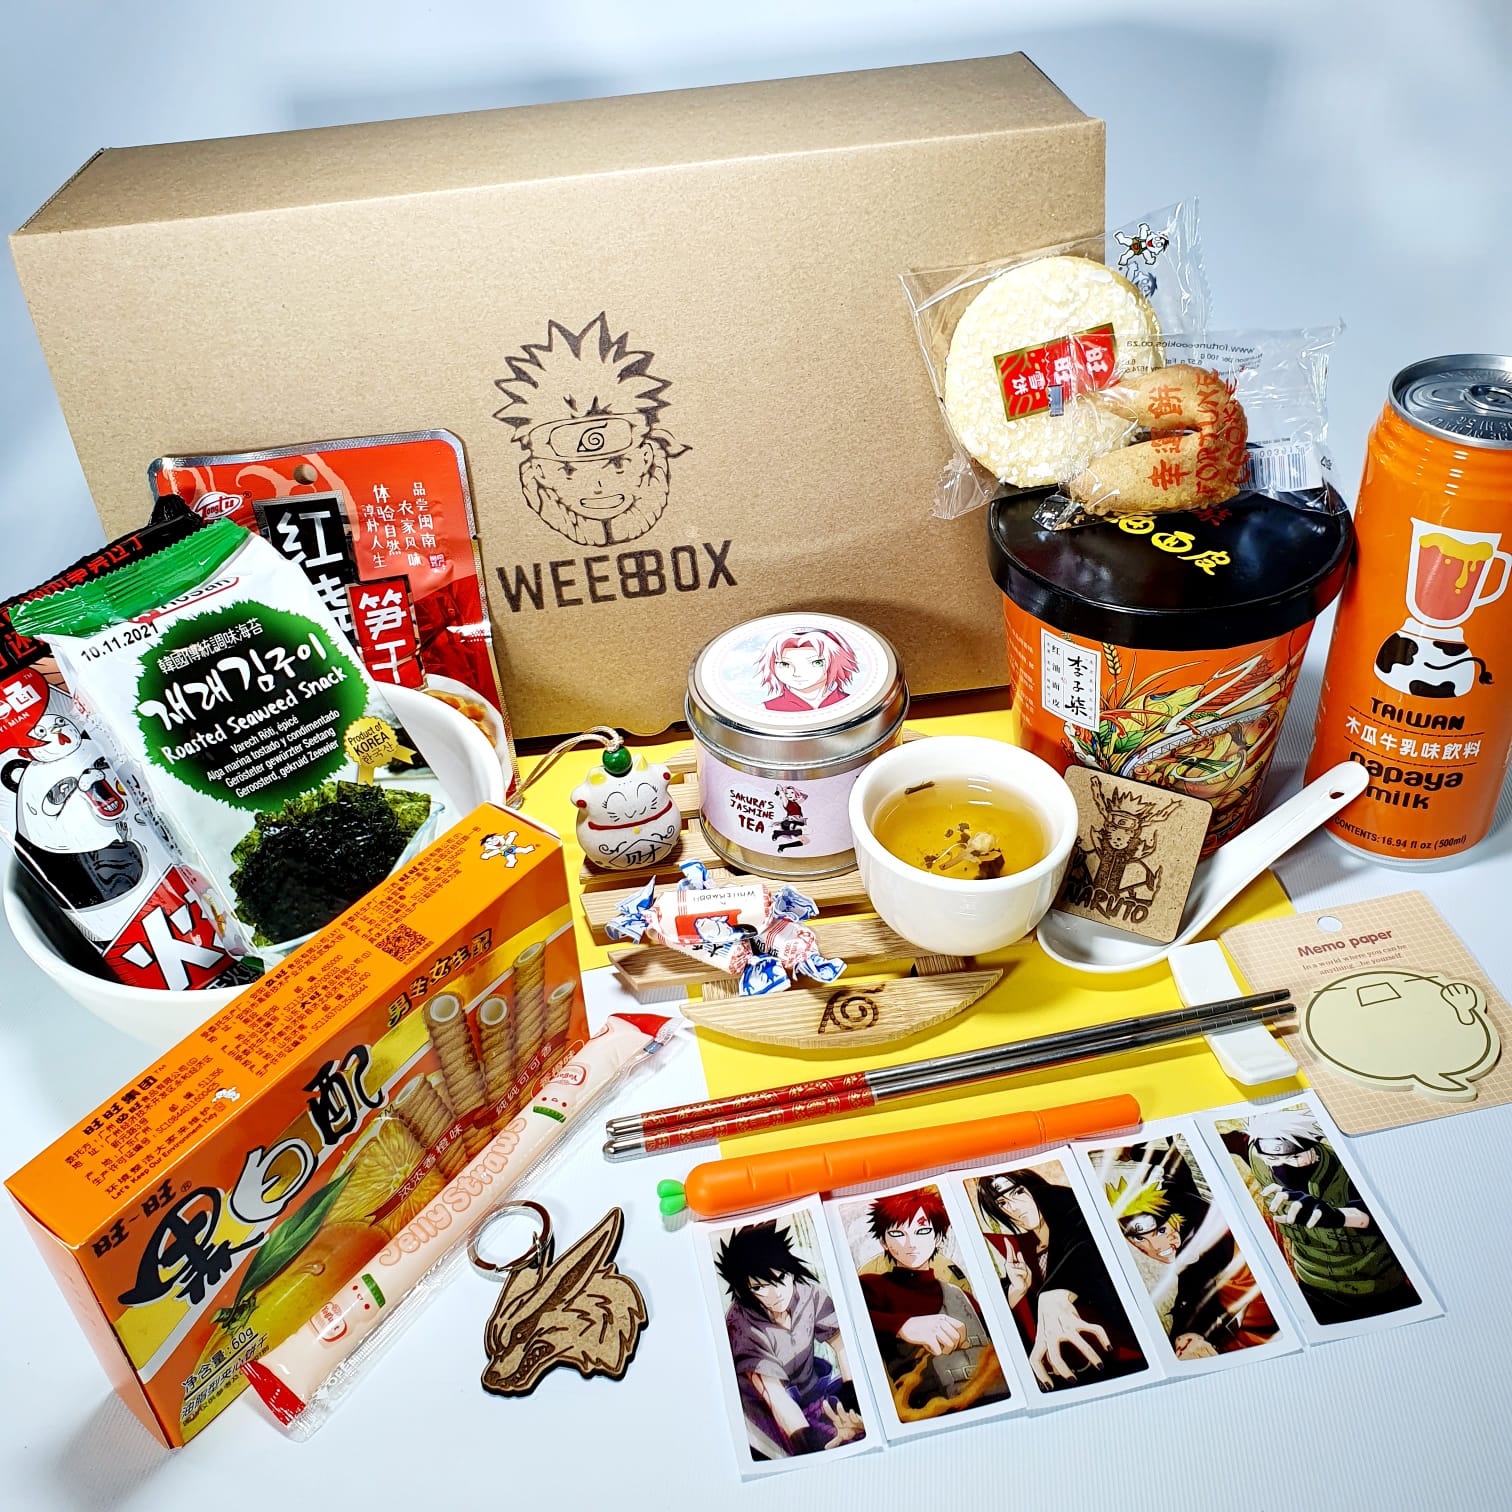 Naruto - Anime Food & Merch Box - Weebbox - The Engrave Slave